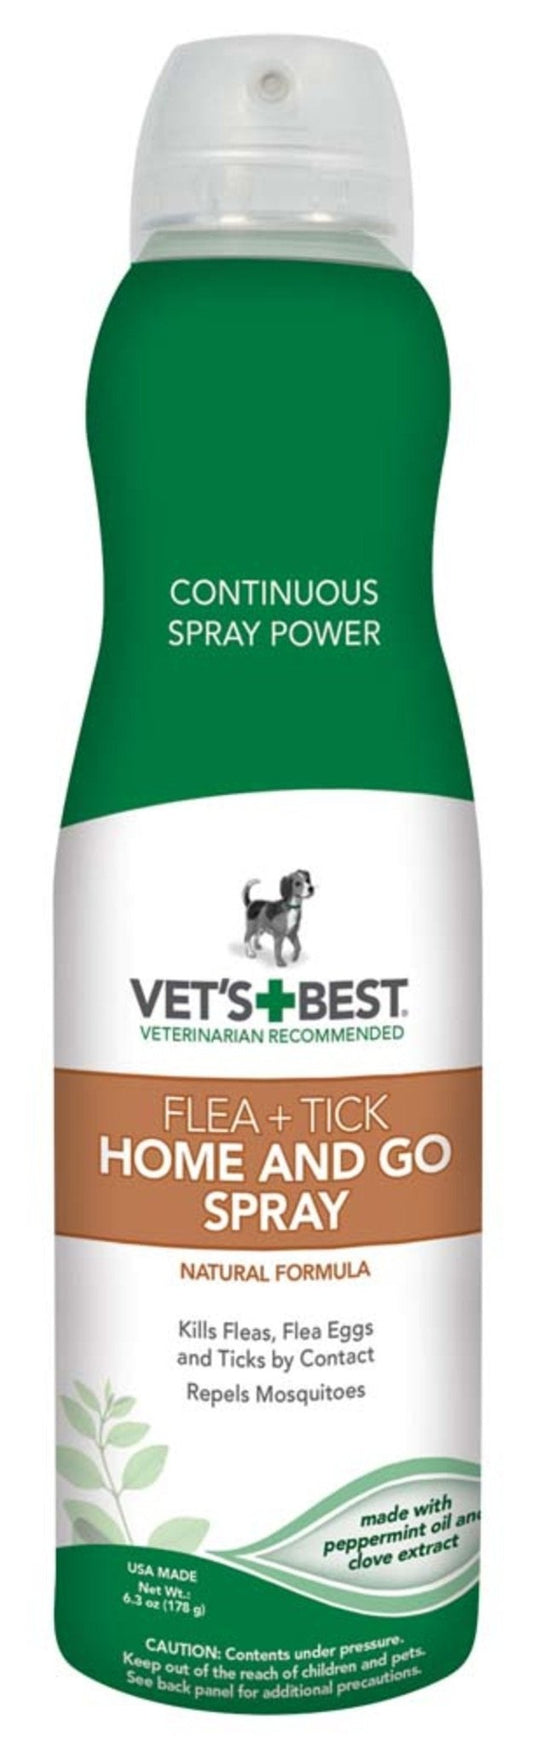 Flea and Tick Home and Go Spray, 6.3 fl oz - Kwik Pets